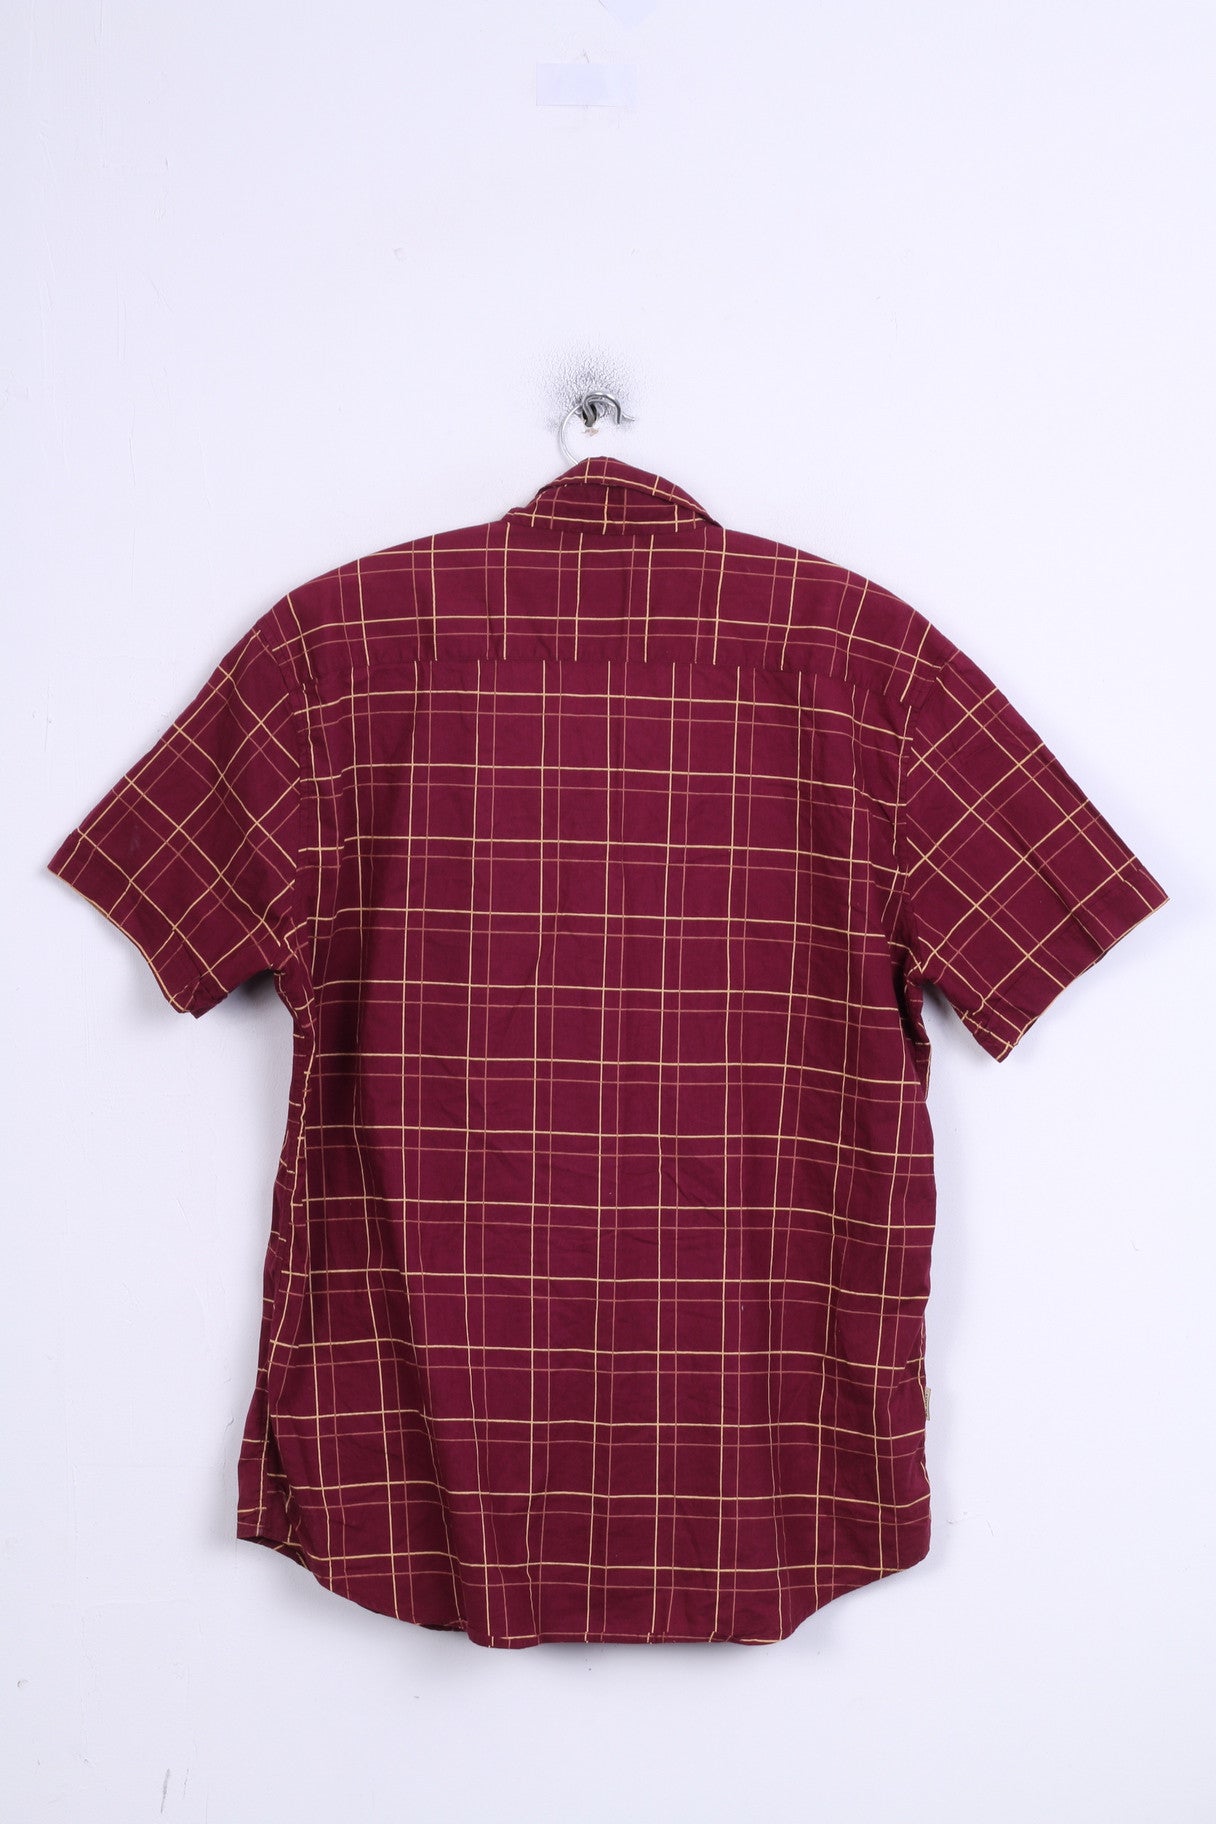 TOG 24 Mens L Casual Shirt Burgundy Short Sleeve Cotton Check